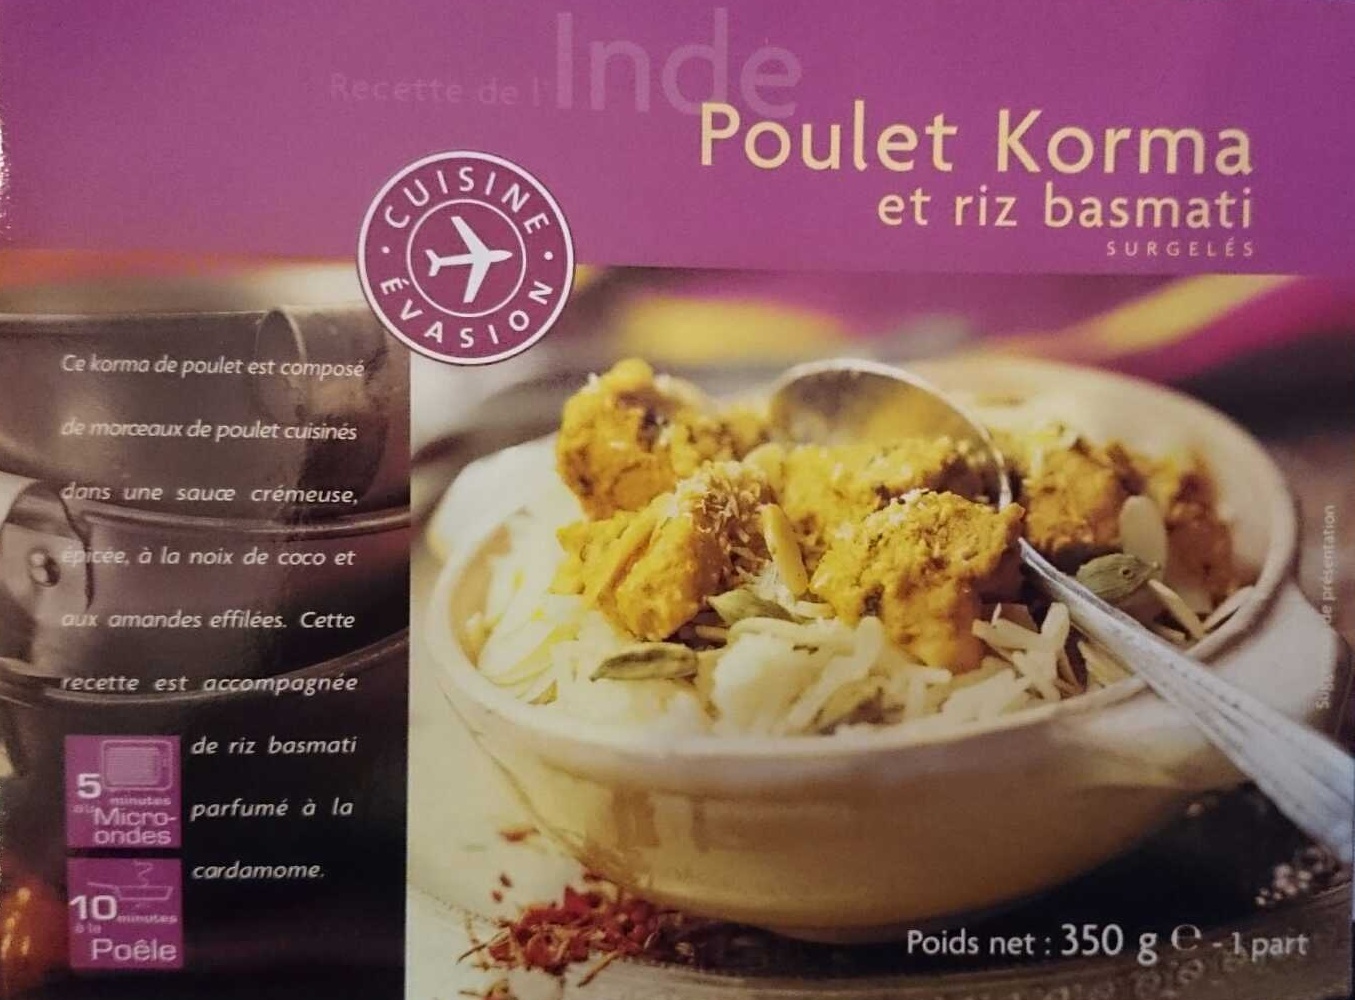 Poulet Korma et riz basmati - Product - fr